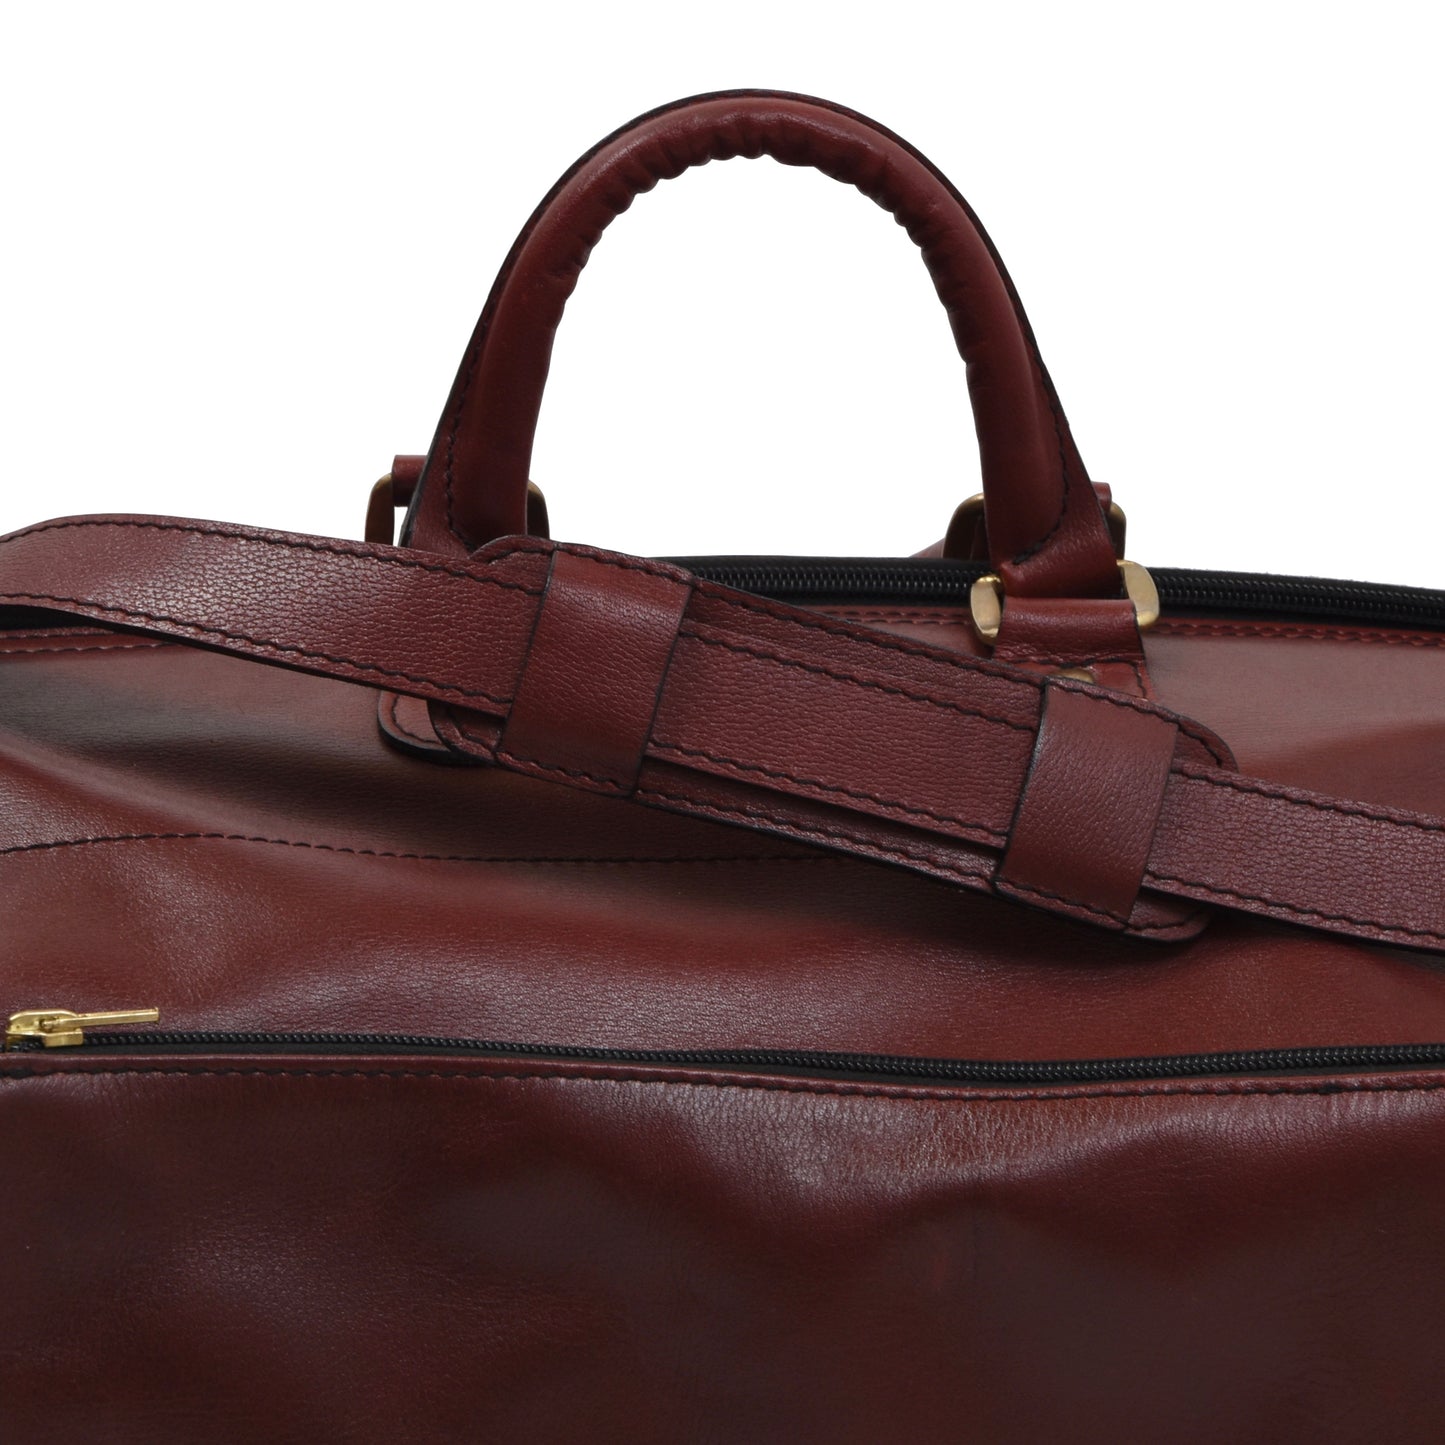 Vintage Leather Duffle Bag - Burgundy